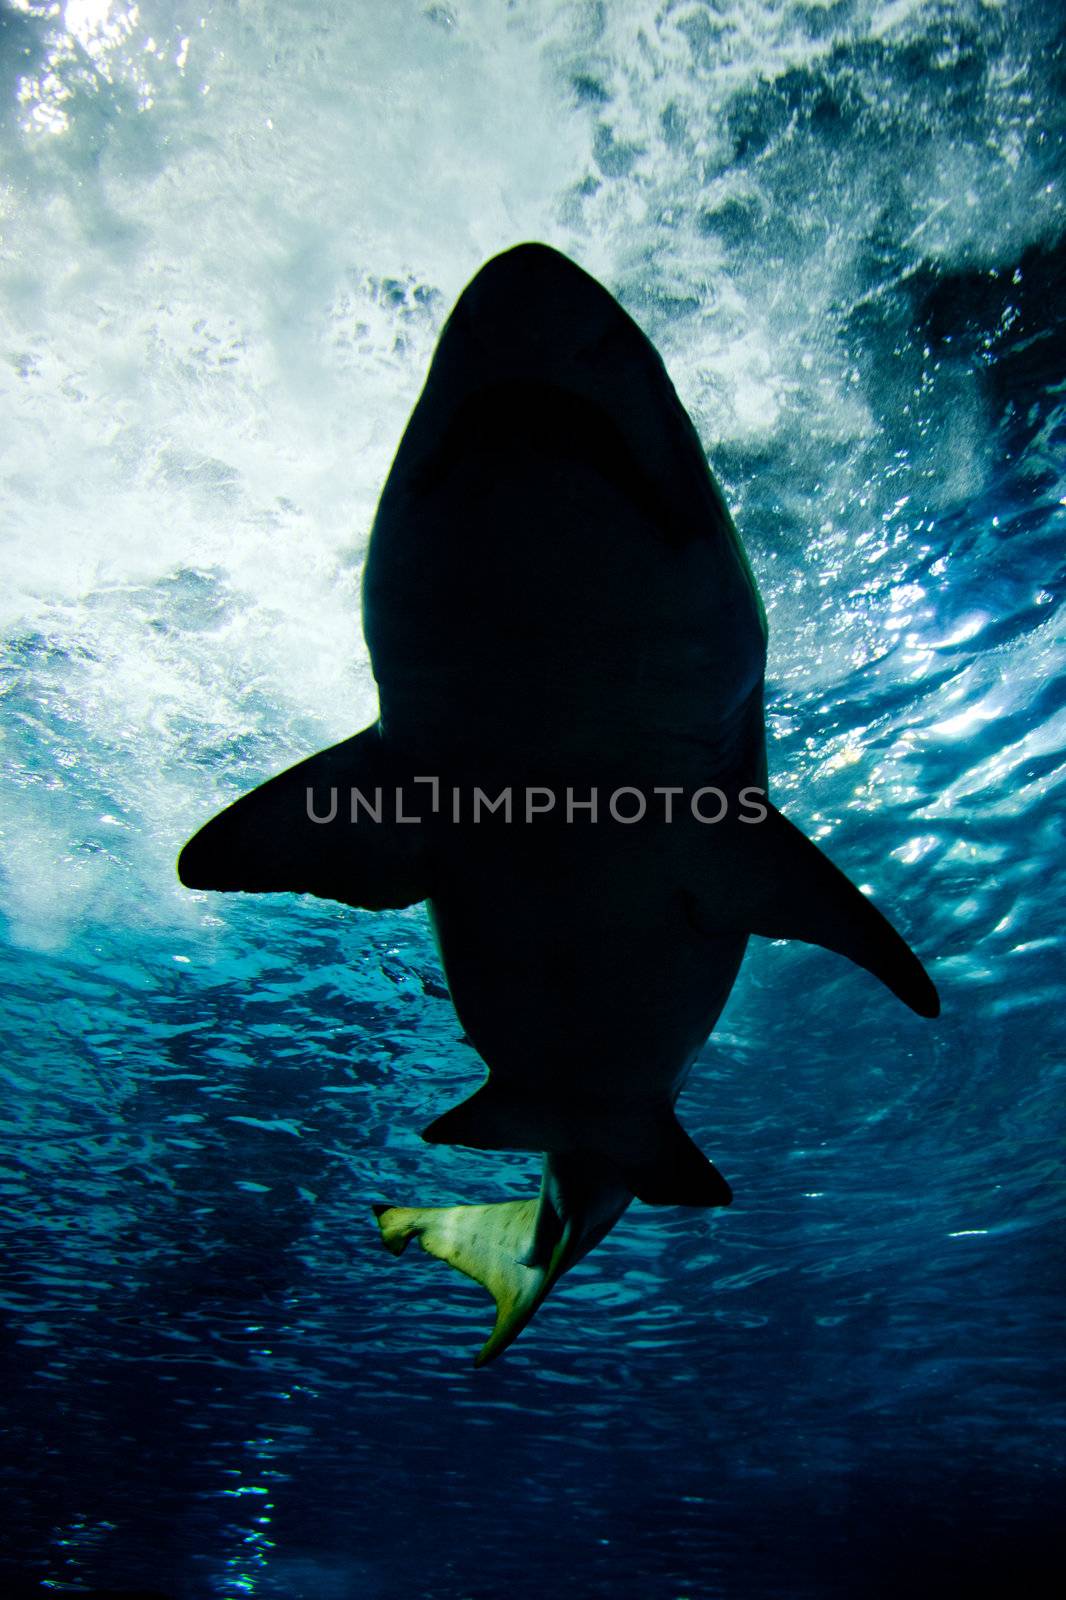 Shark silhouette underwater by photocreo